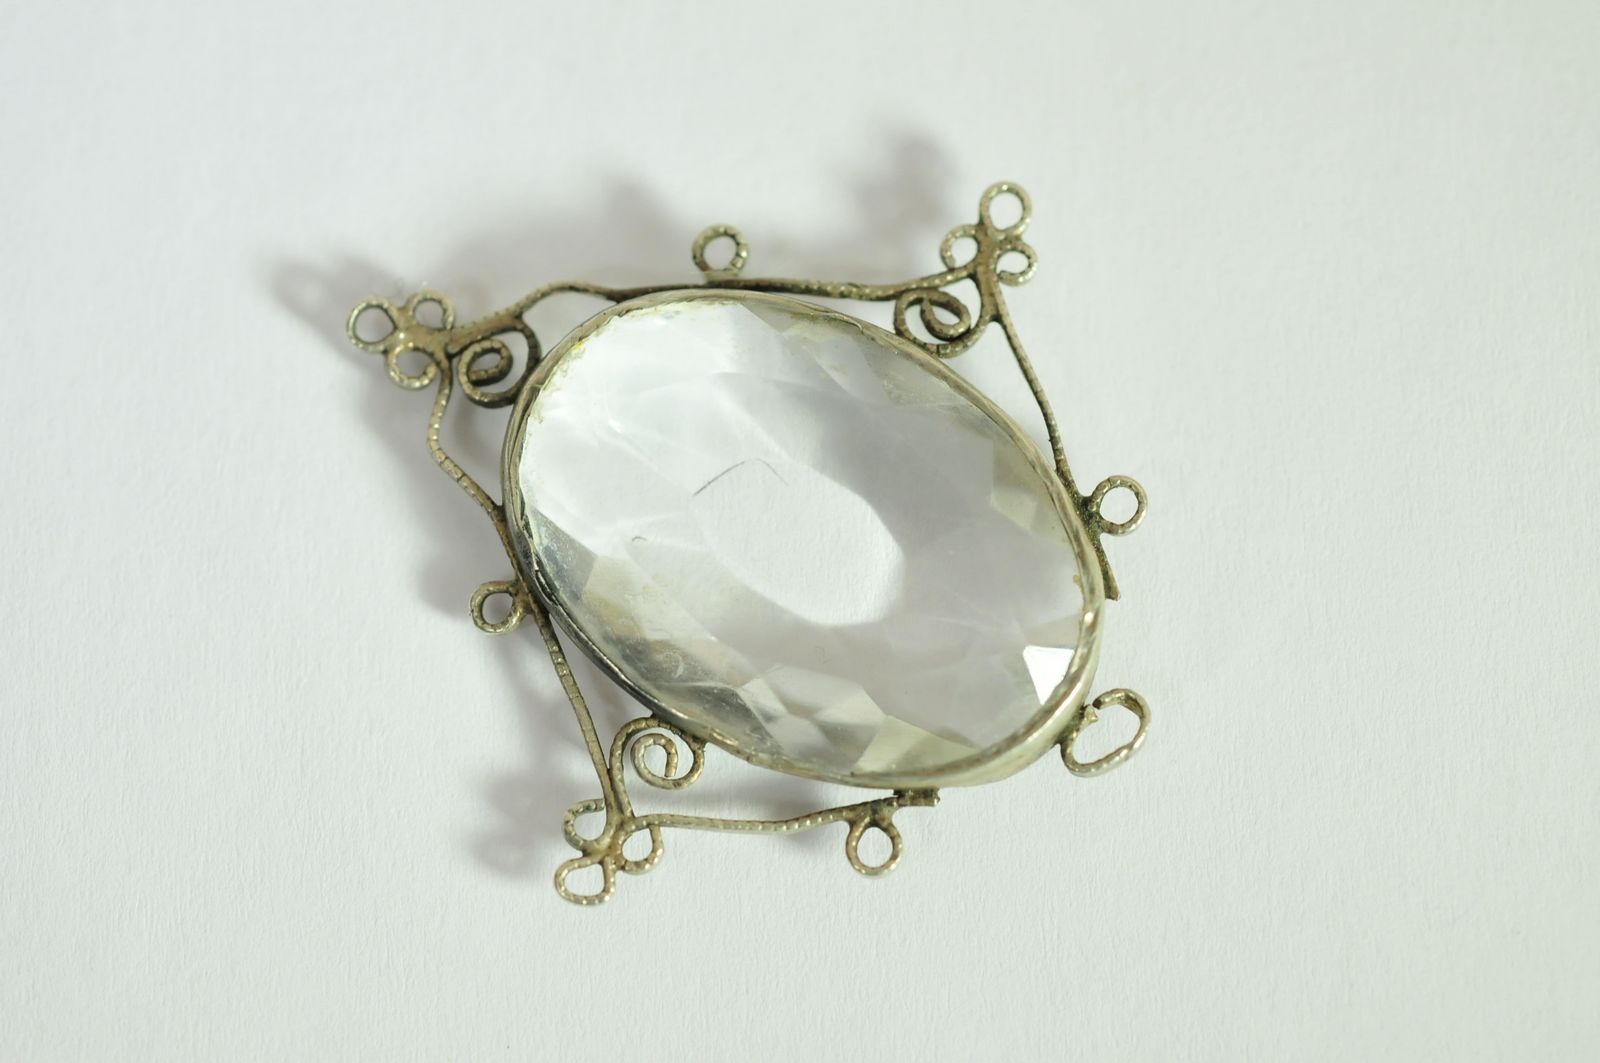 A glass pendant having white metal filigree framework.